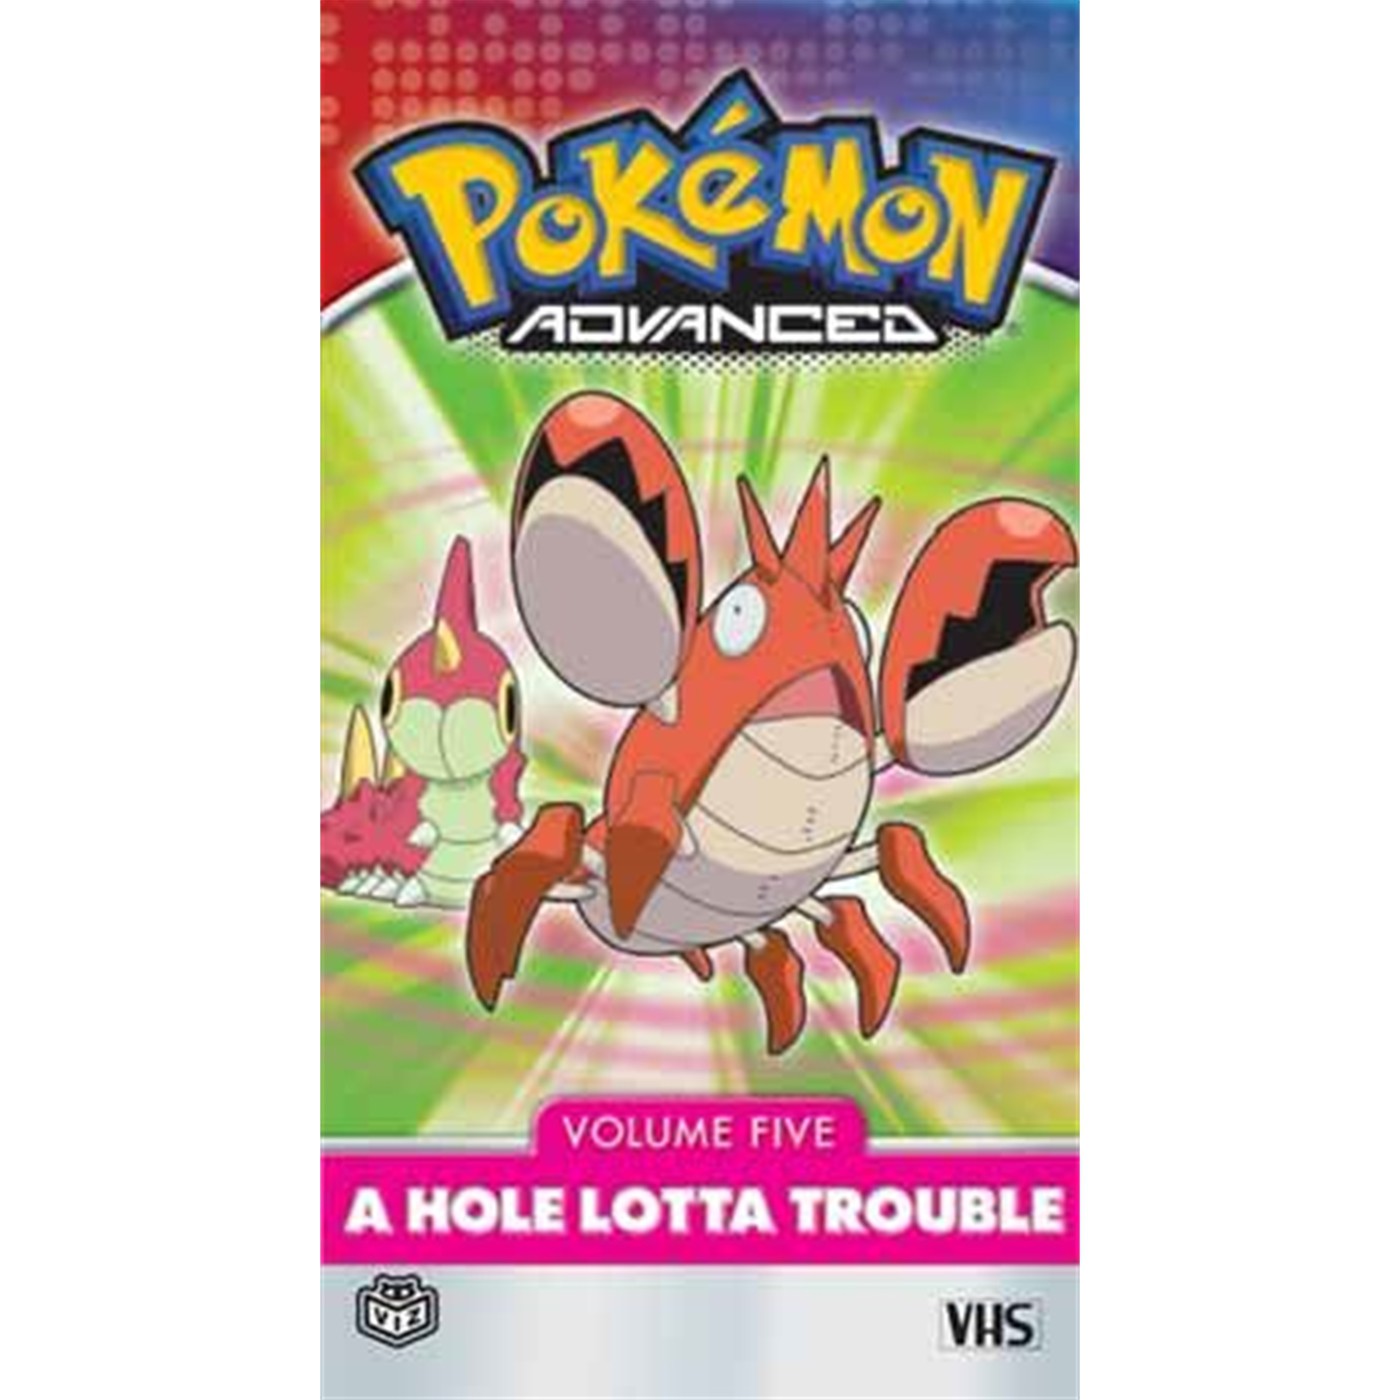 Pokemon Advanced (VHS), Vol. 5: A Hole Lotta Trouble